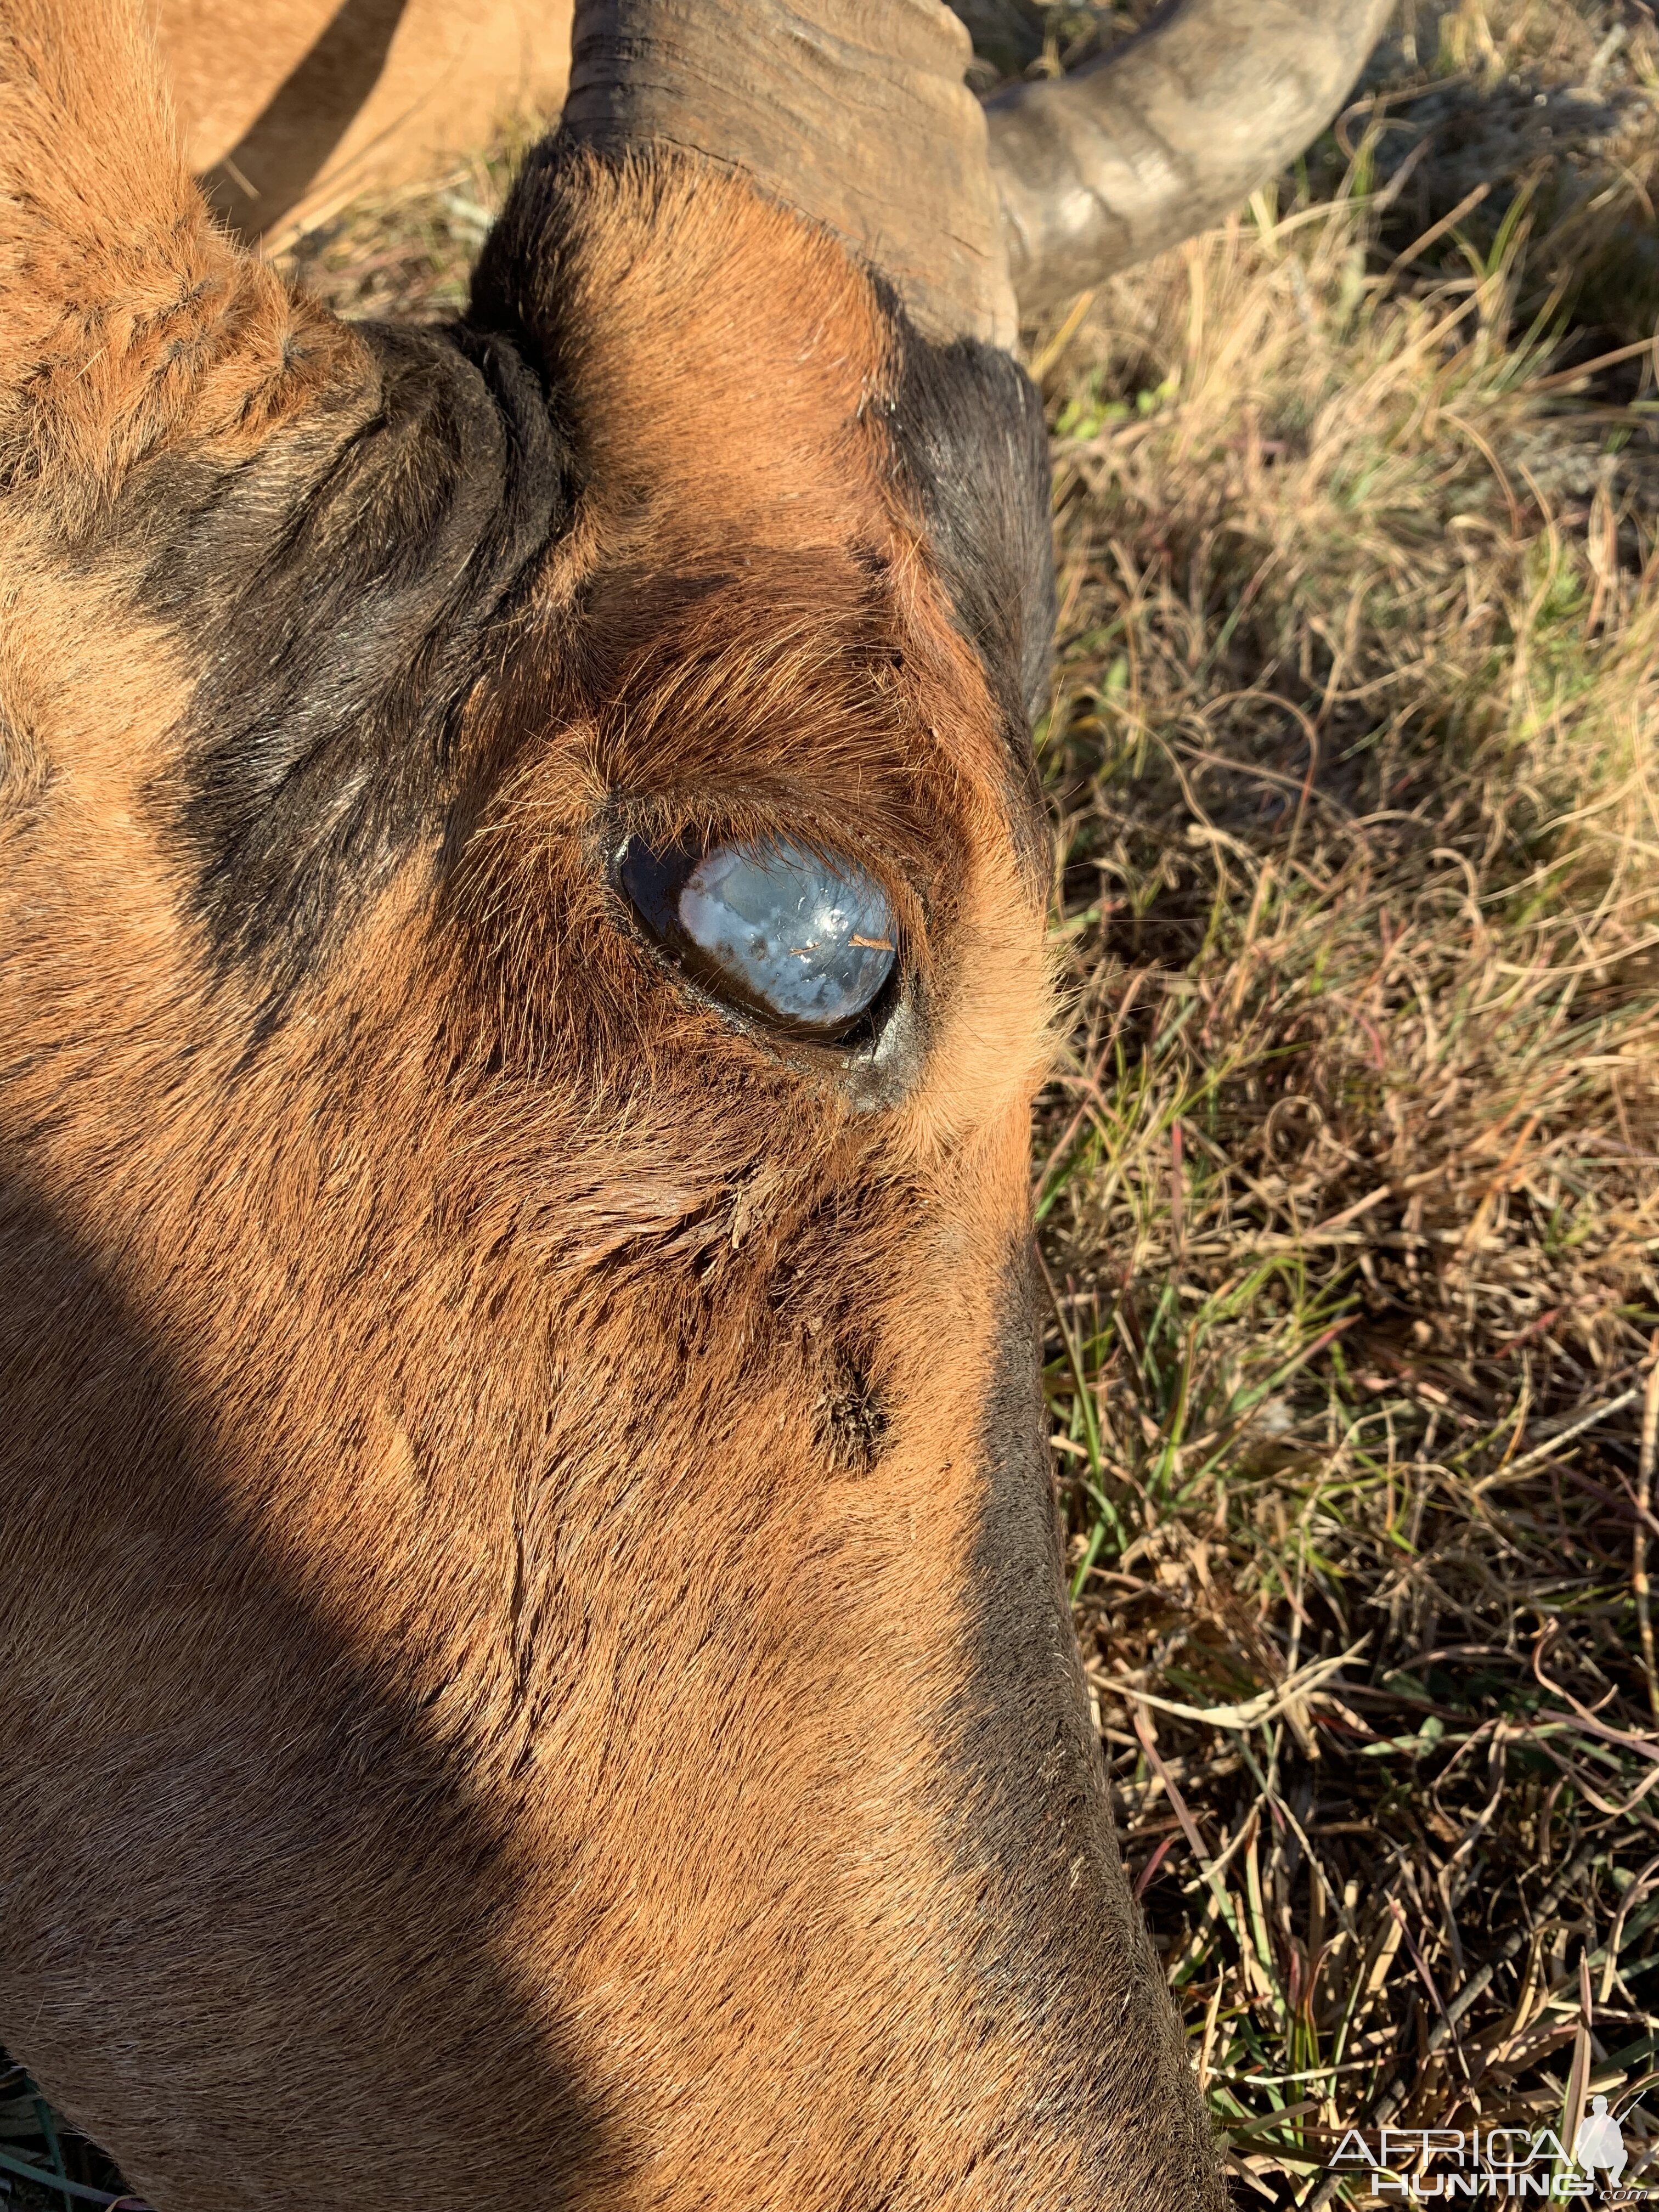 Old Red Hartebeest blind in eye